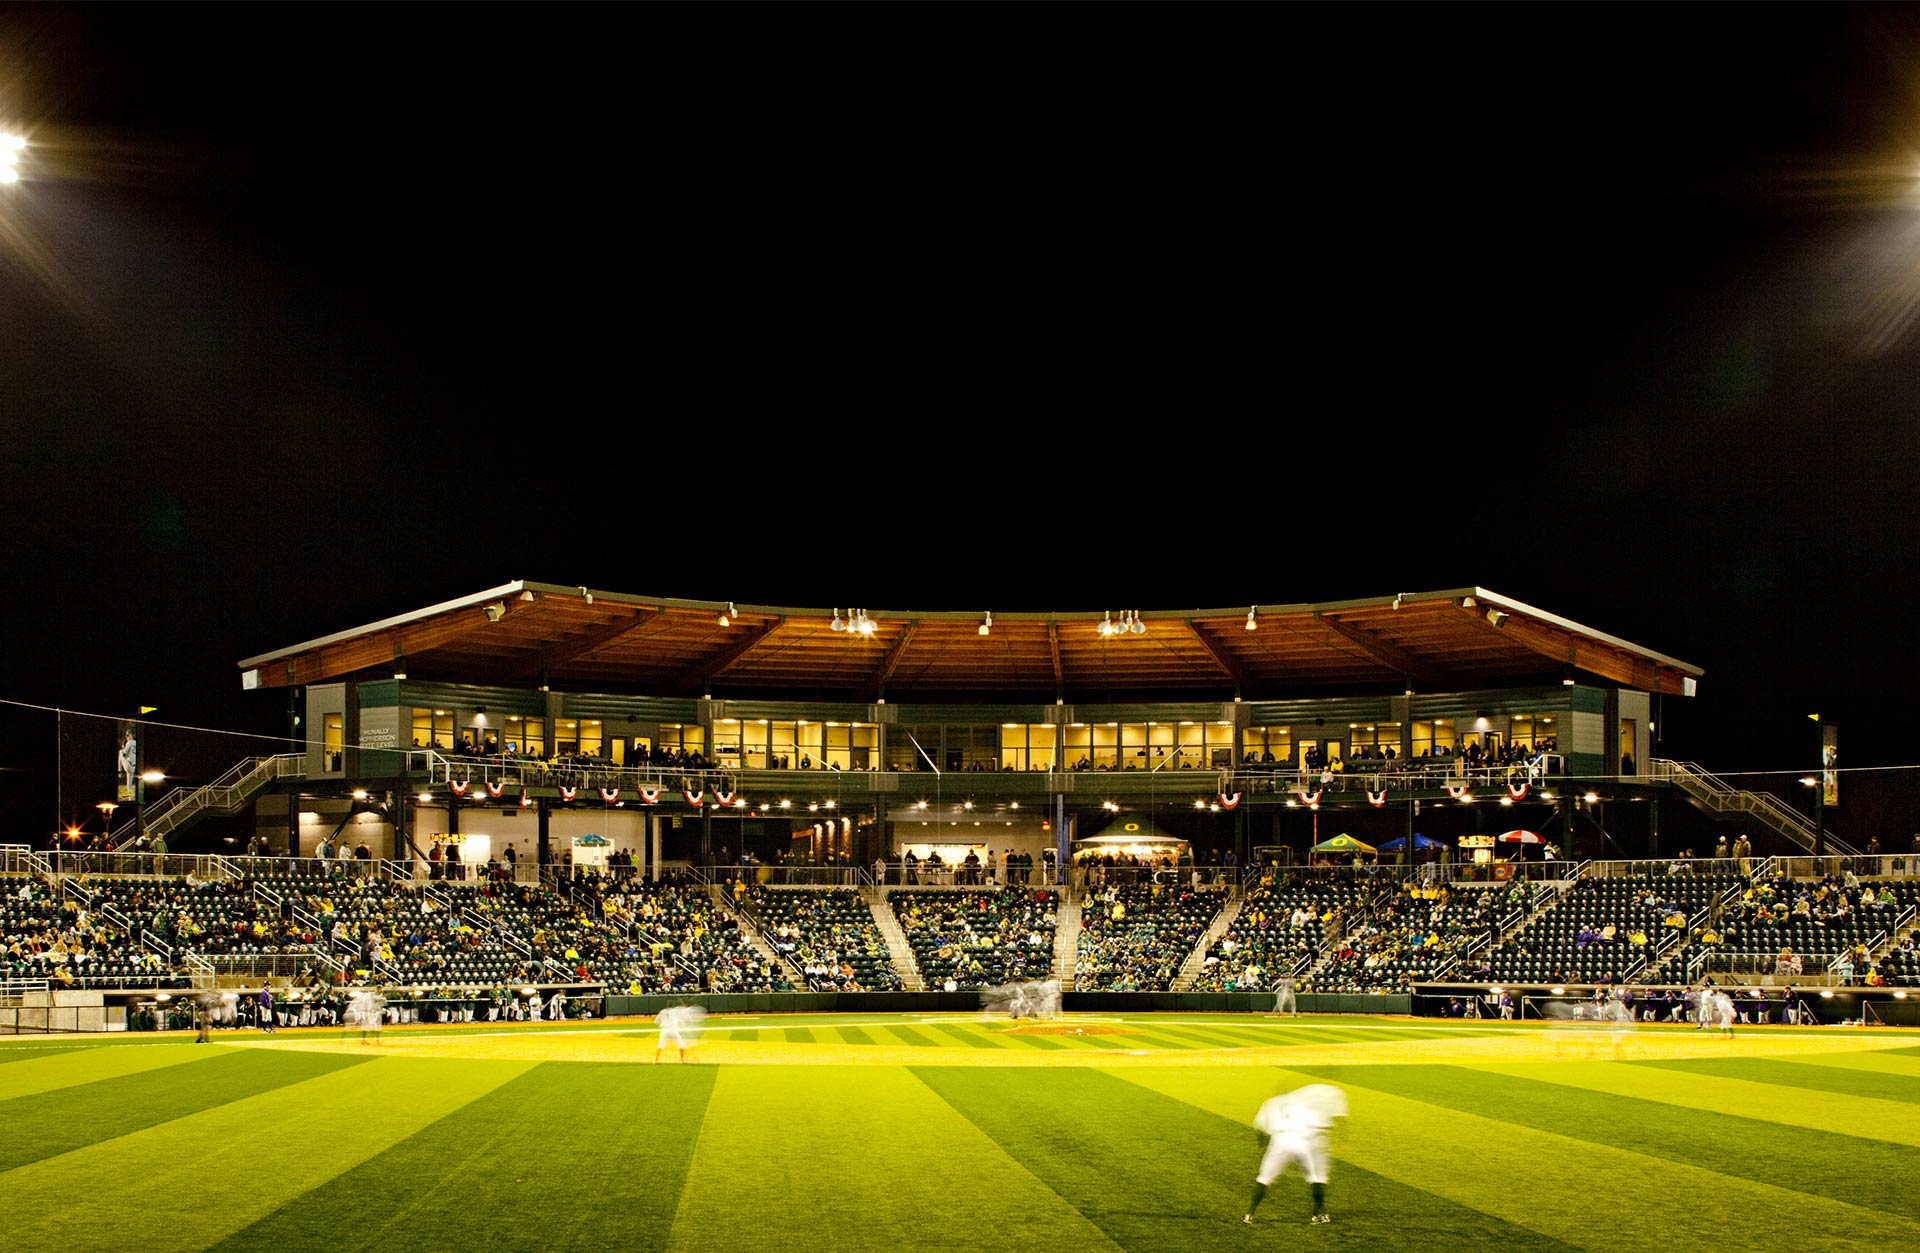 University of Oregon PK park baseball field at night with crowd